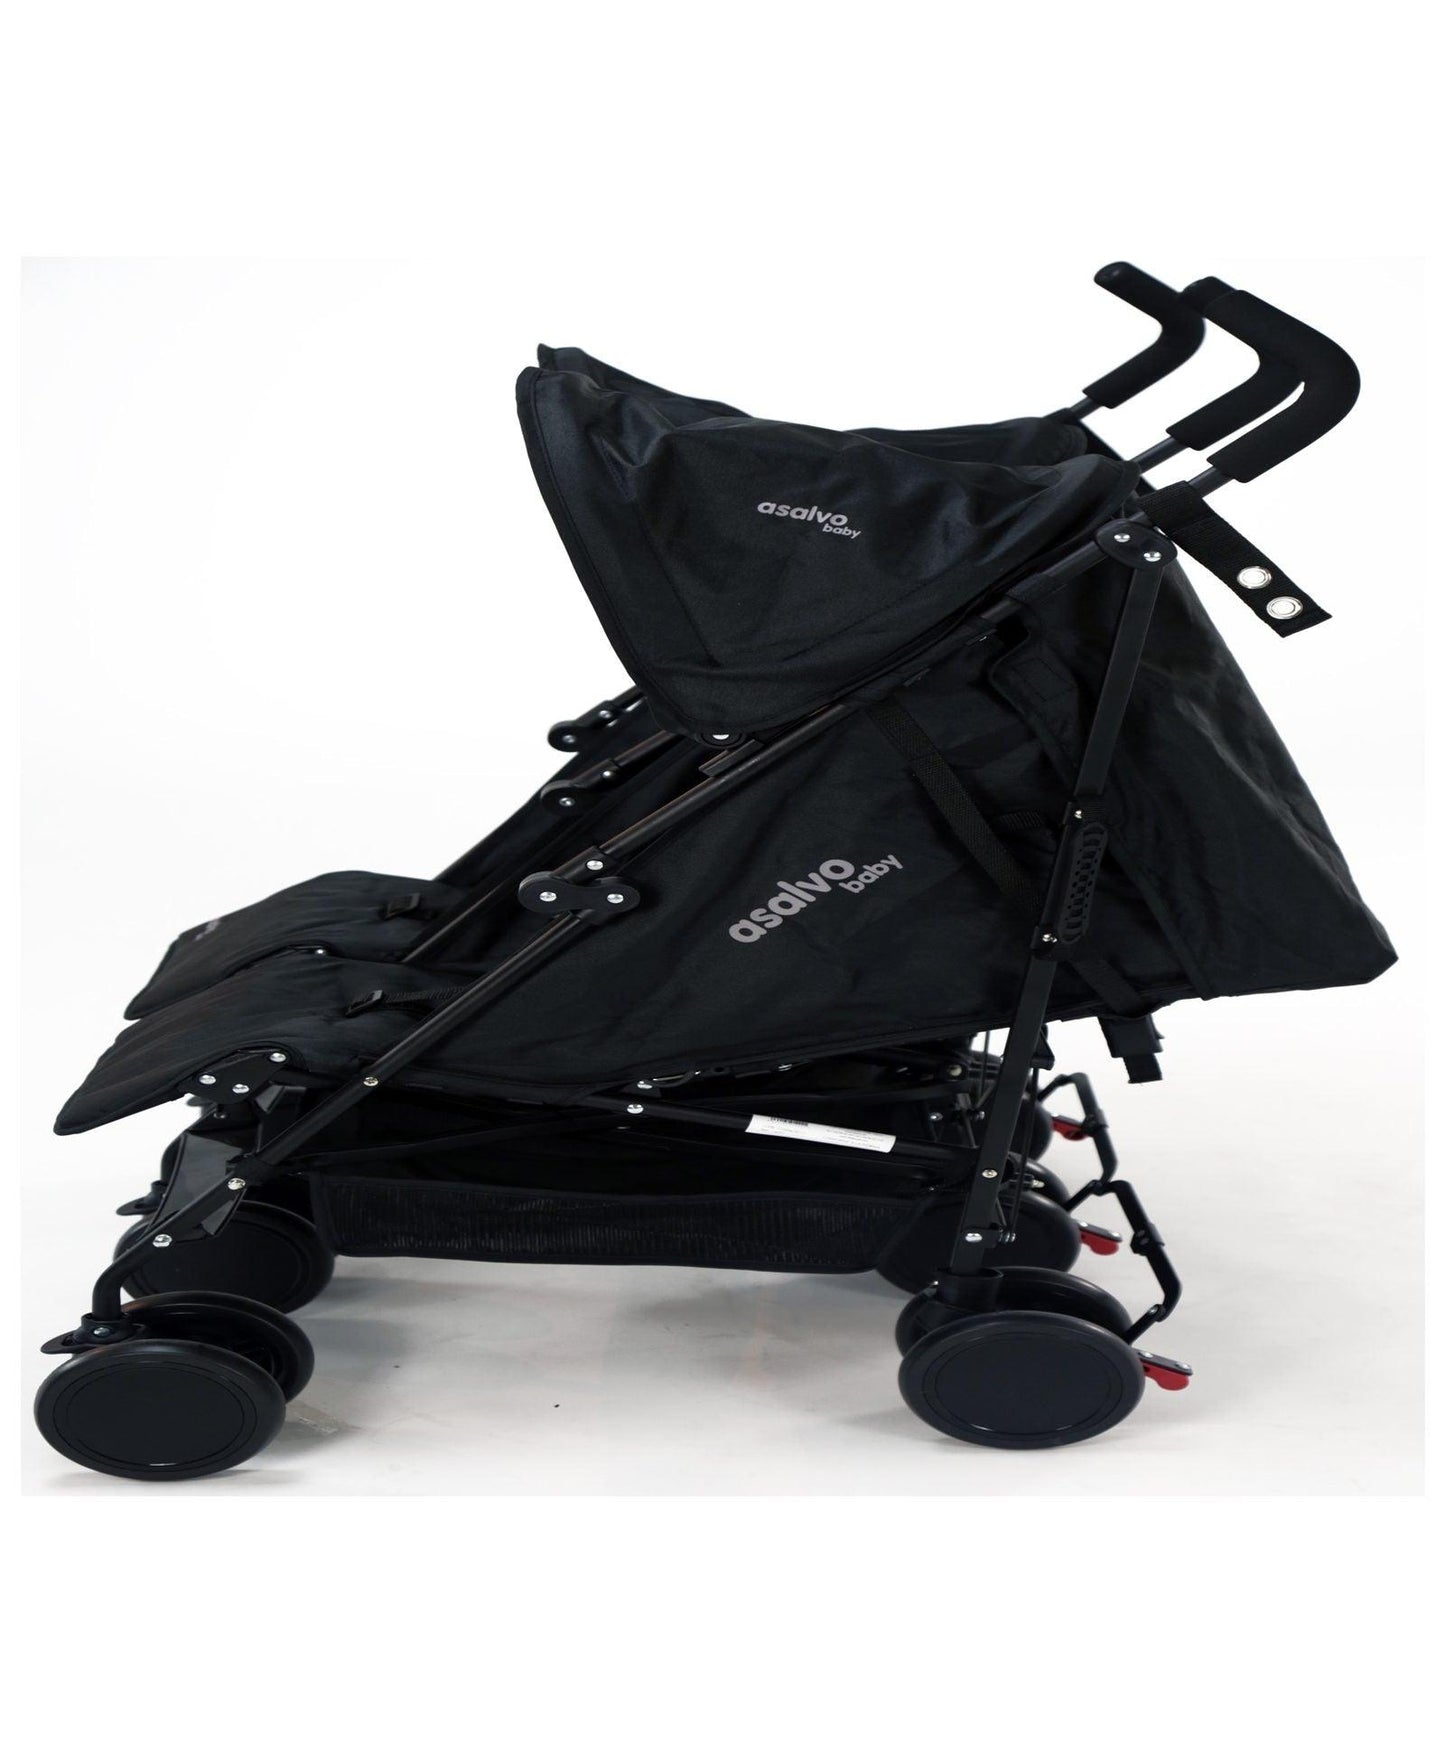 PATOYS | Asalvo Spain 14221 Double Stroller - Black - PATOYS